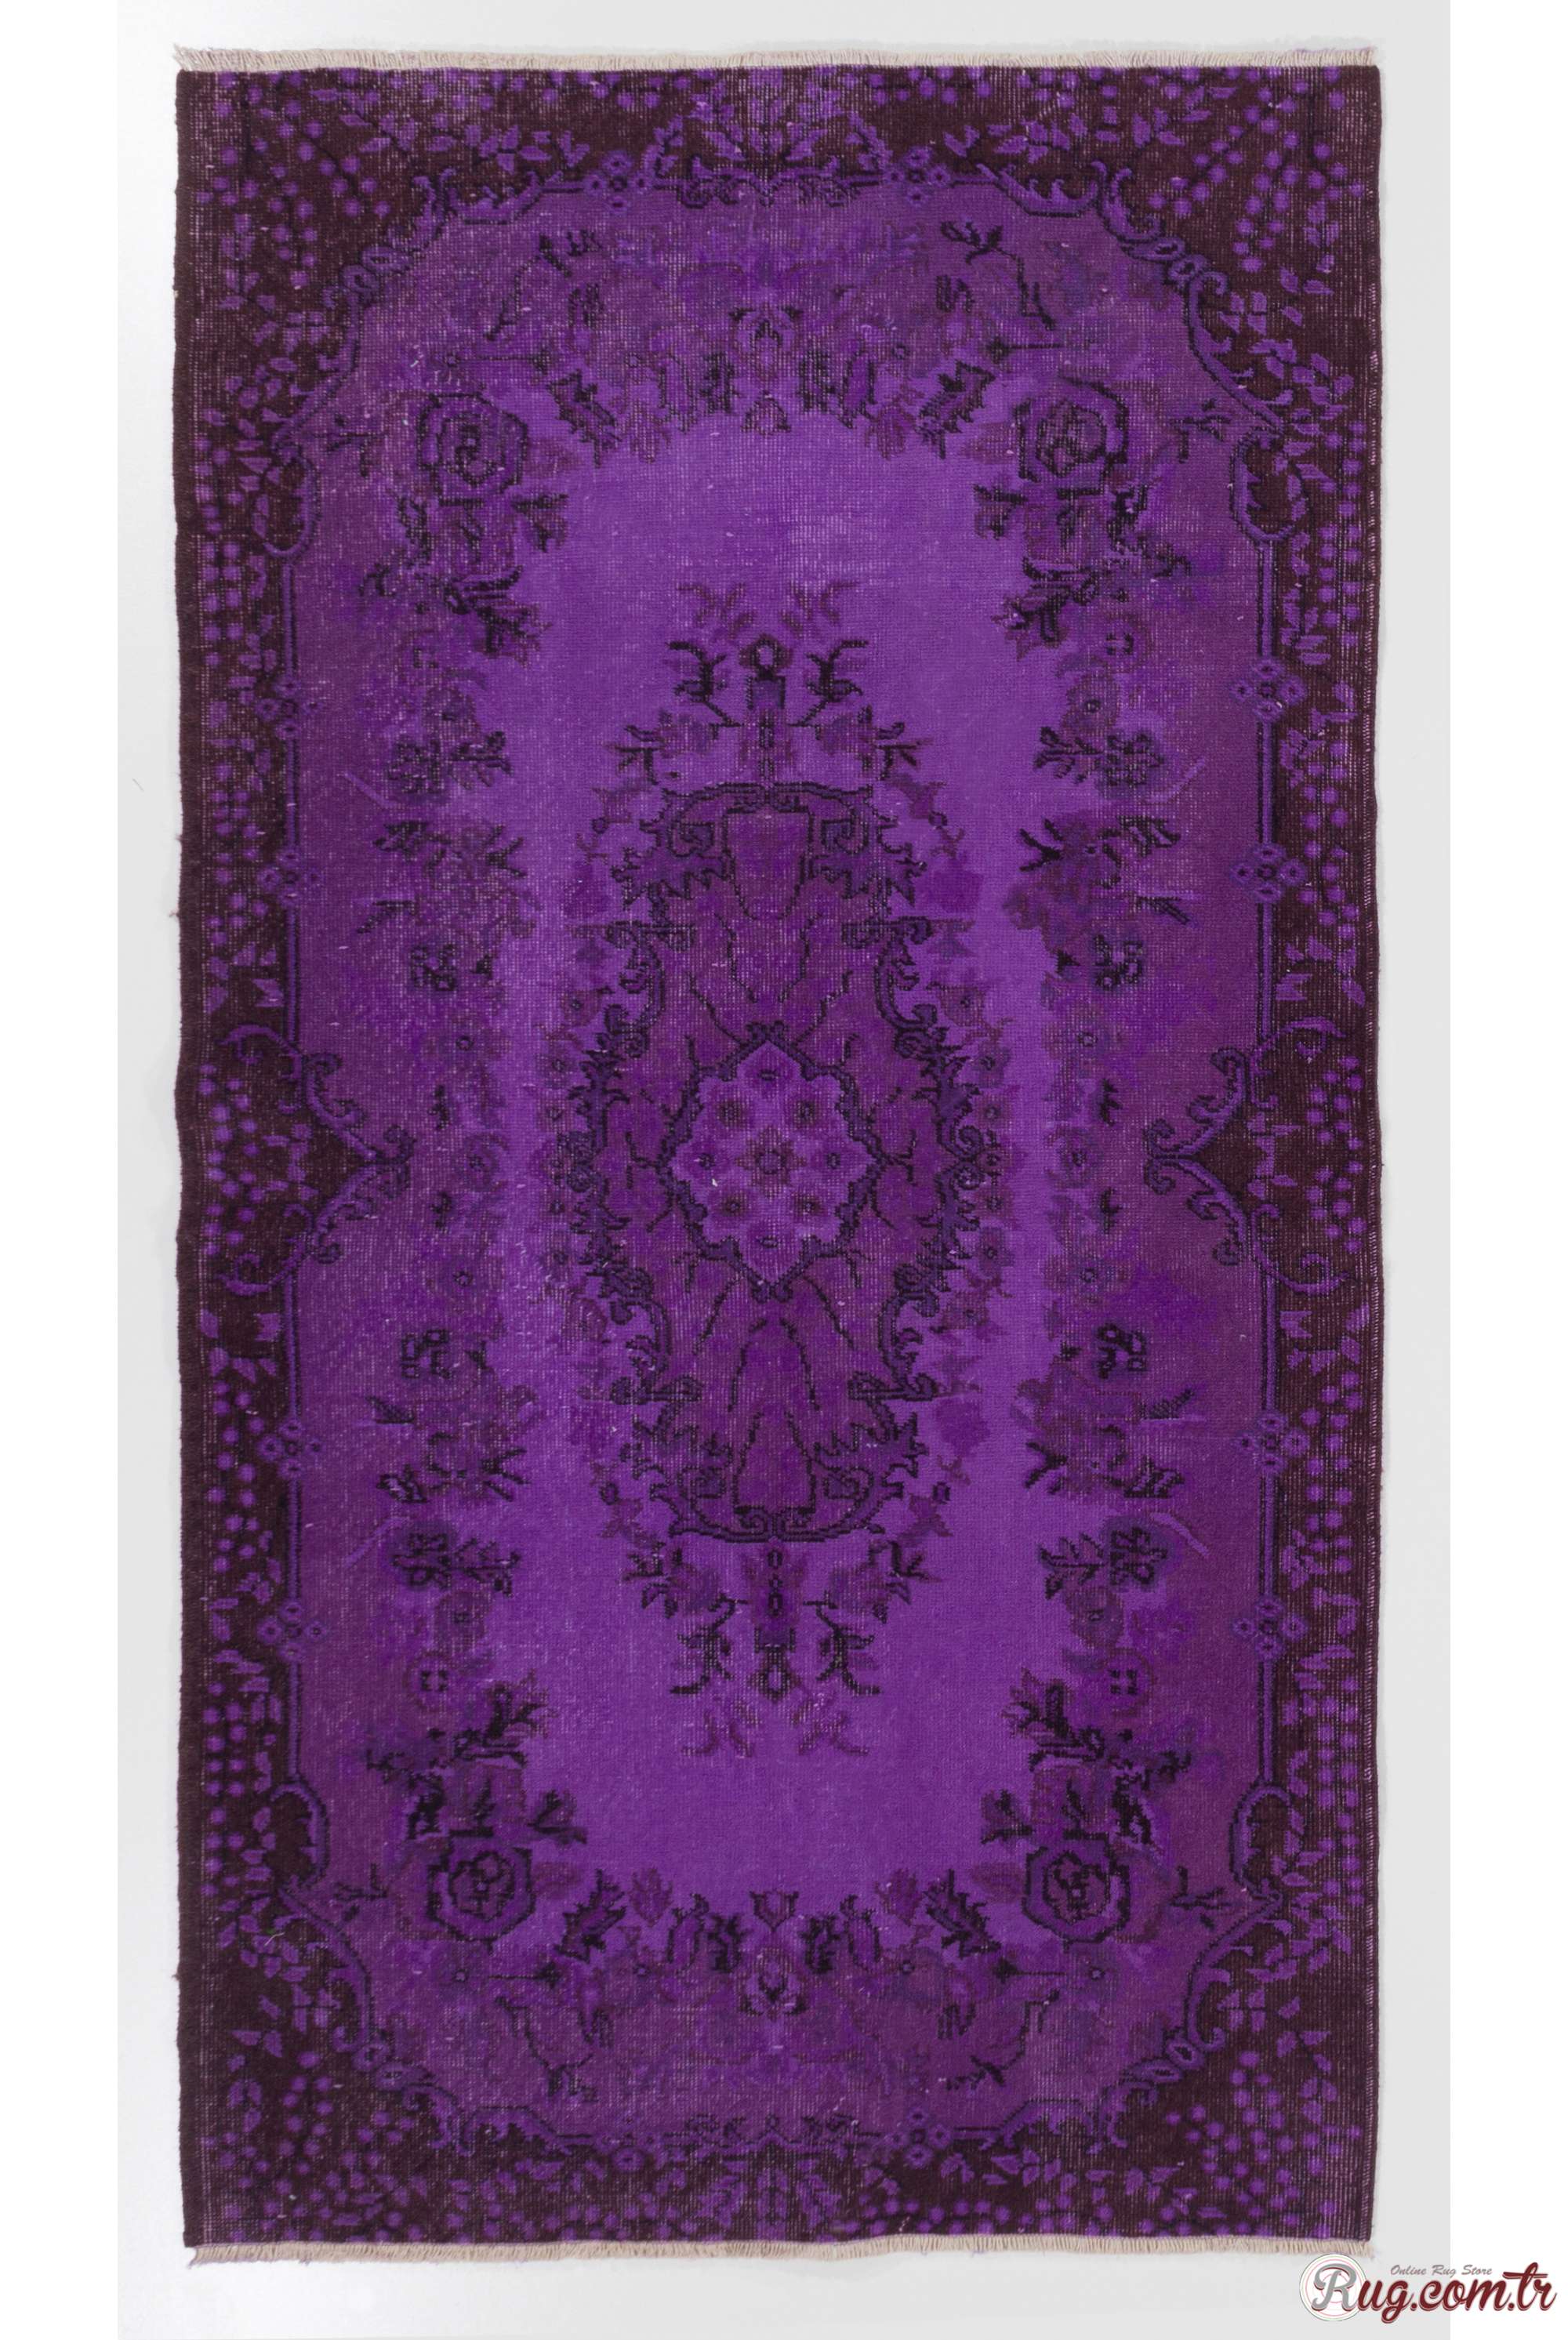 Purple Color Vintage Overdyed Handmade, Overdyed Turkish Rugs